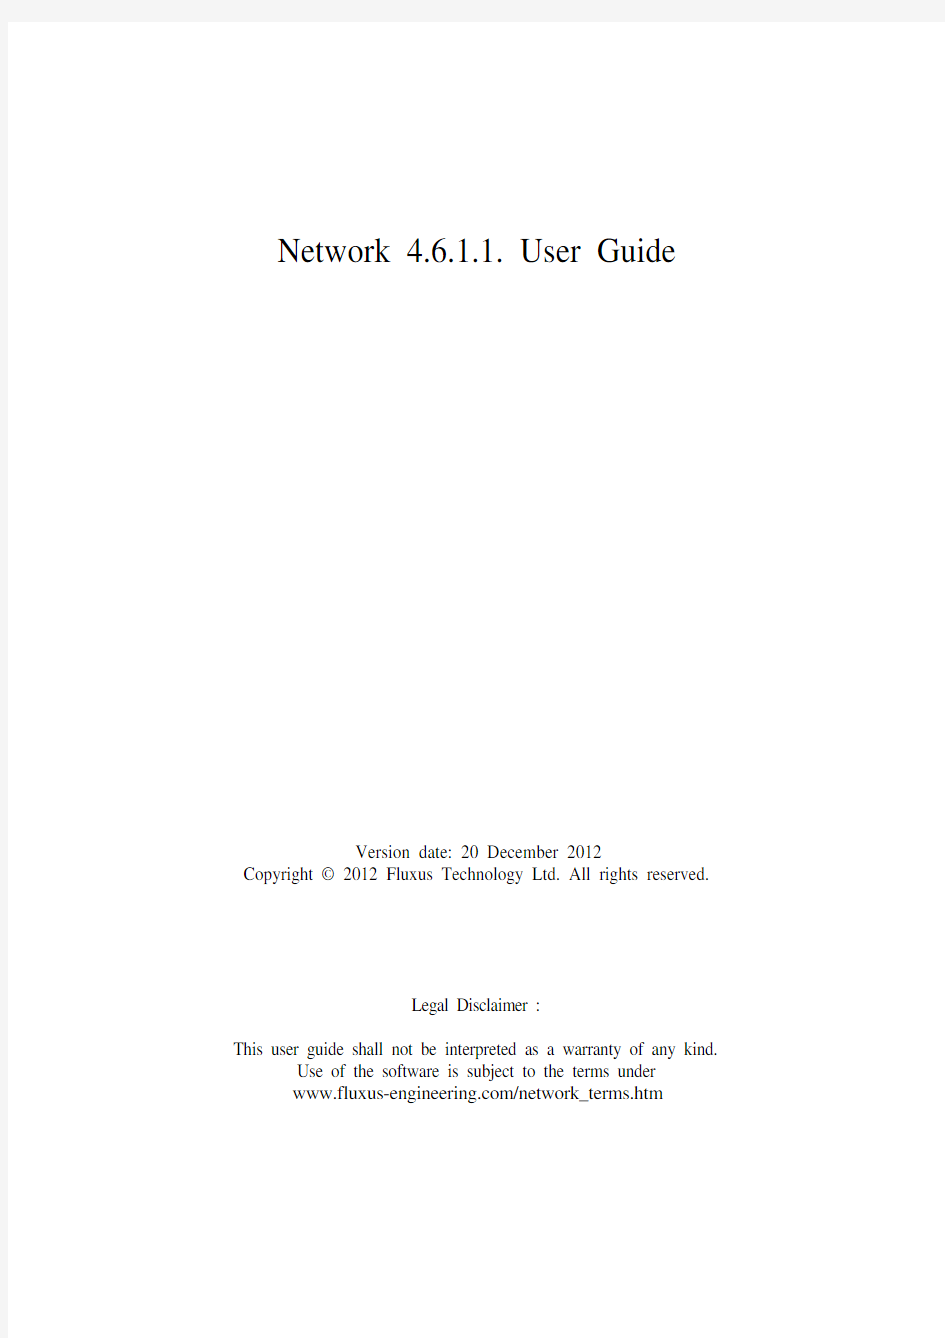 Network4611_user_guide